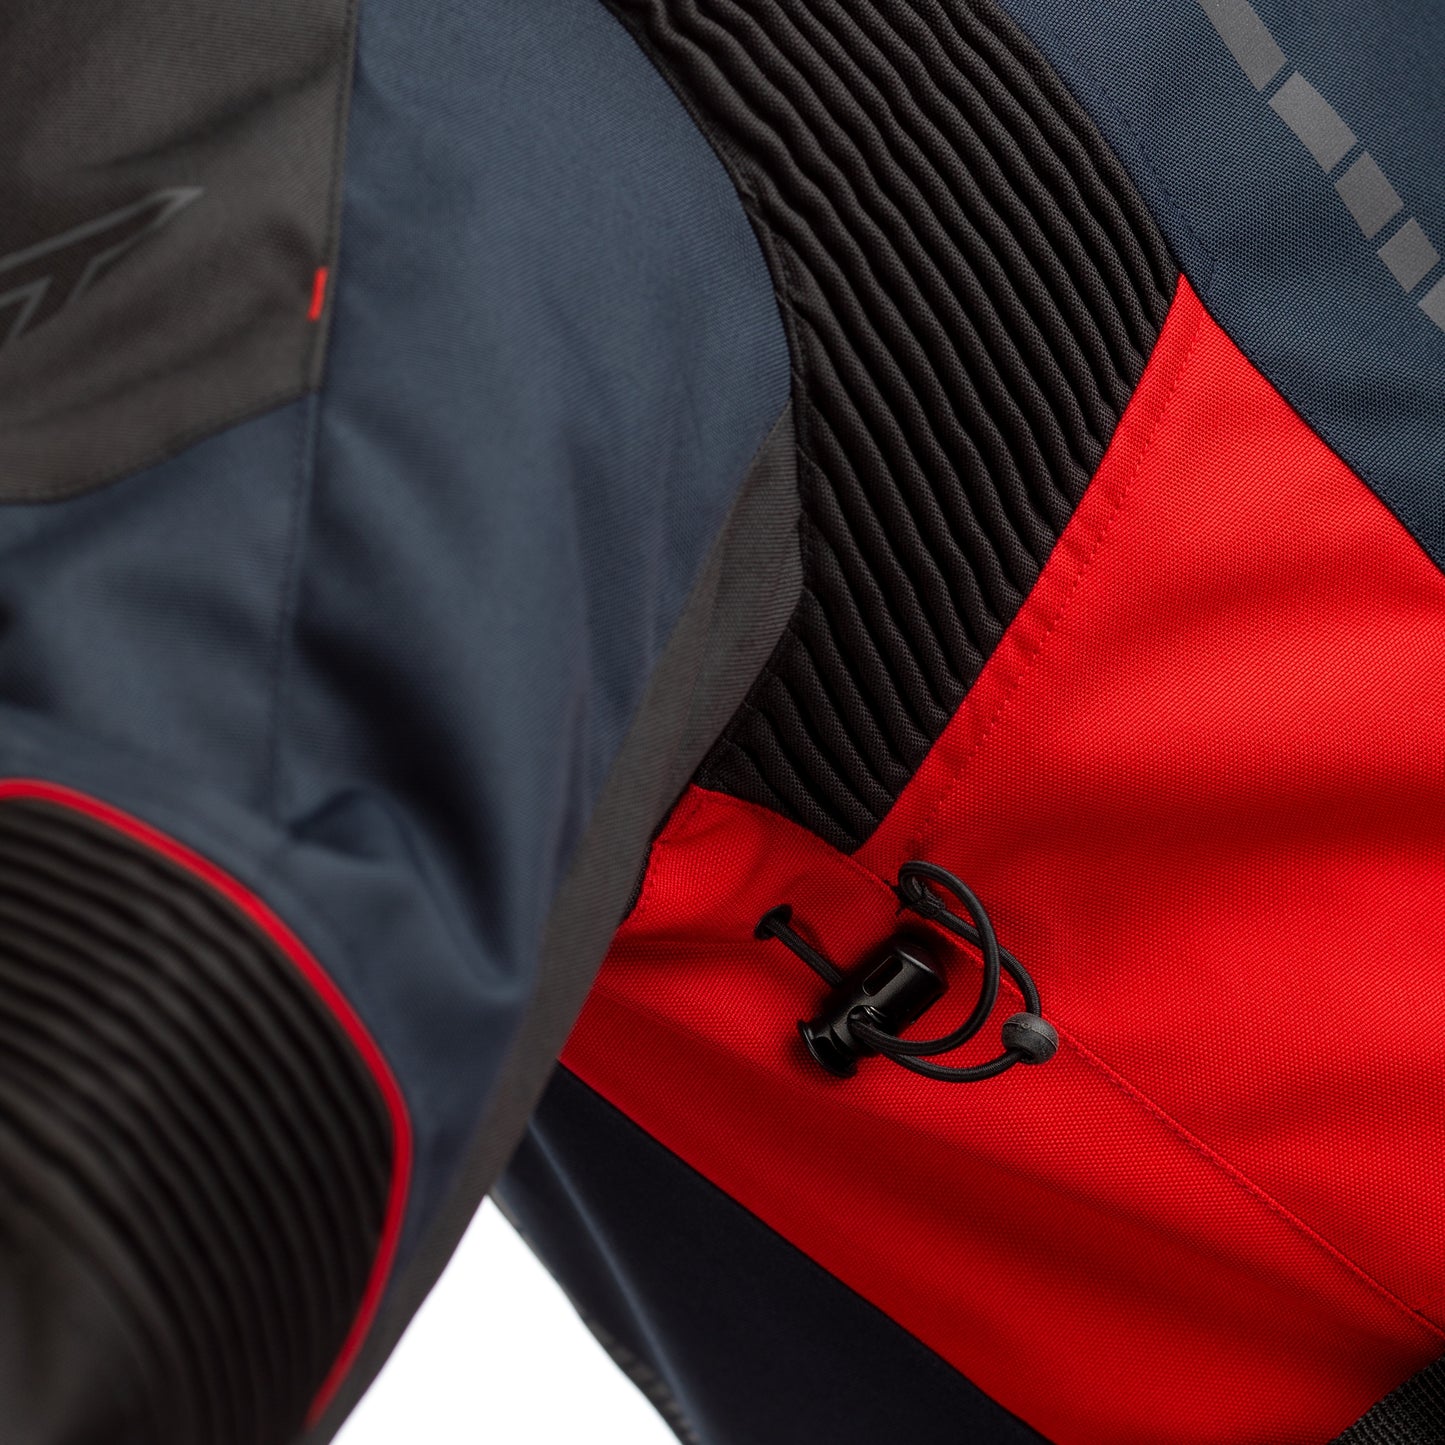 RST Atlas CE Men's Waterproof Textile Jacket - Blue / Black / Red (2366)